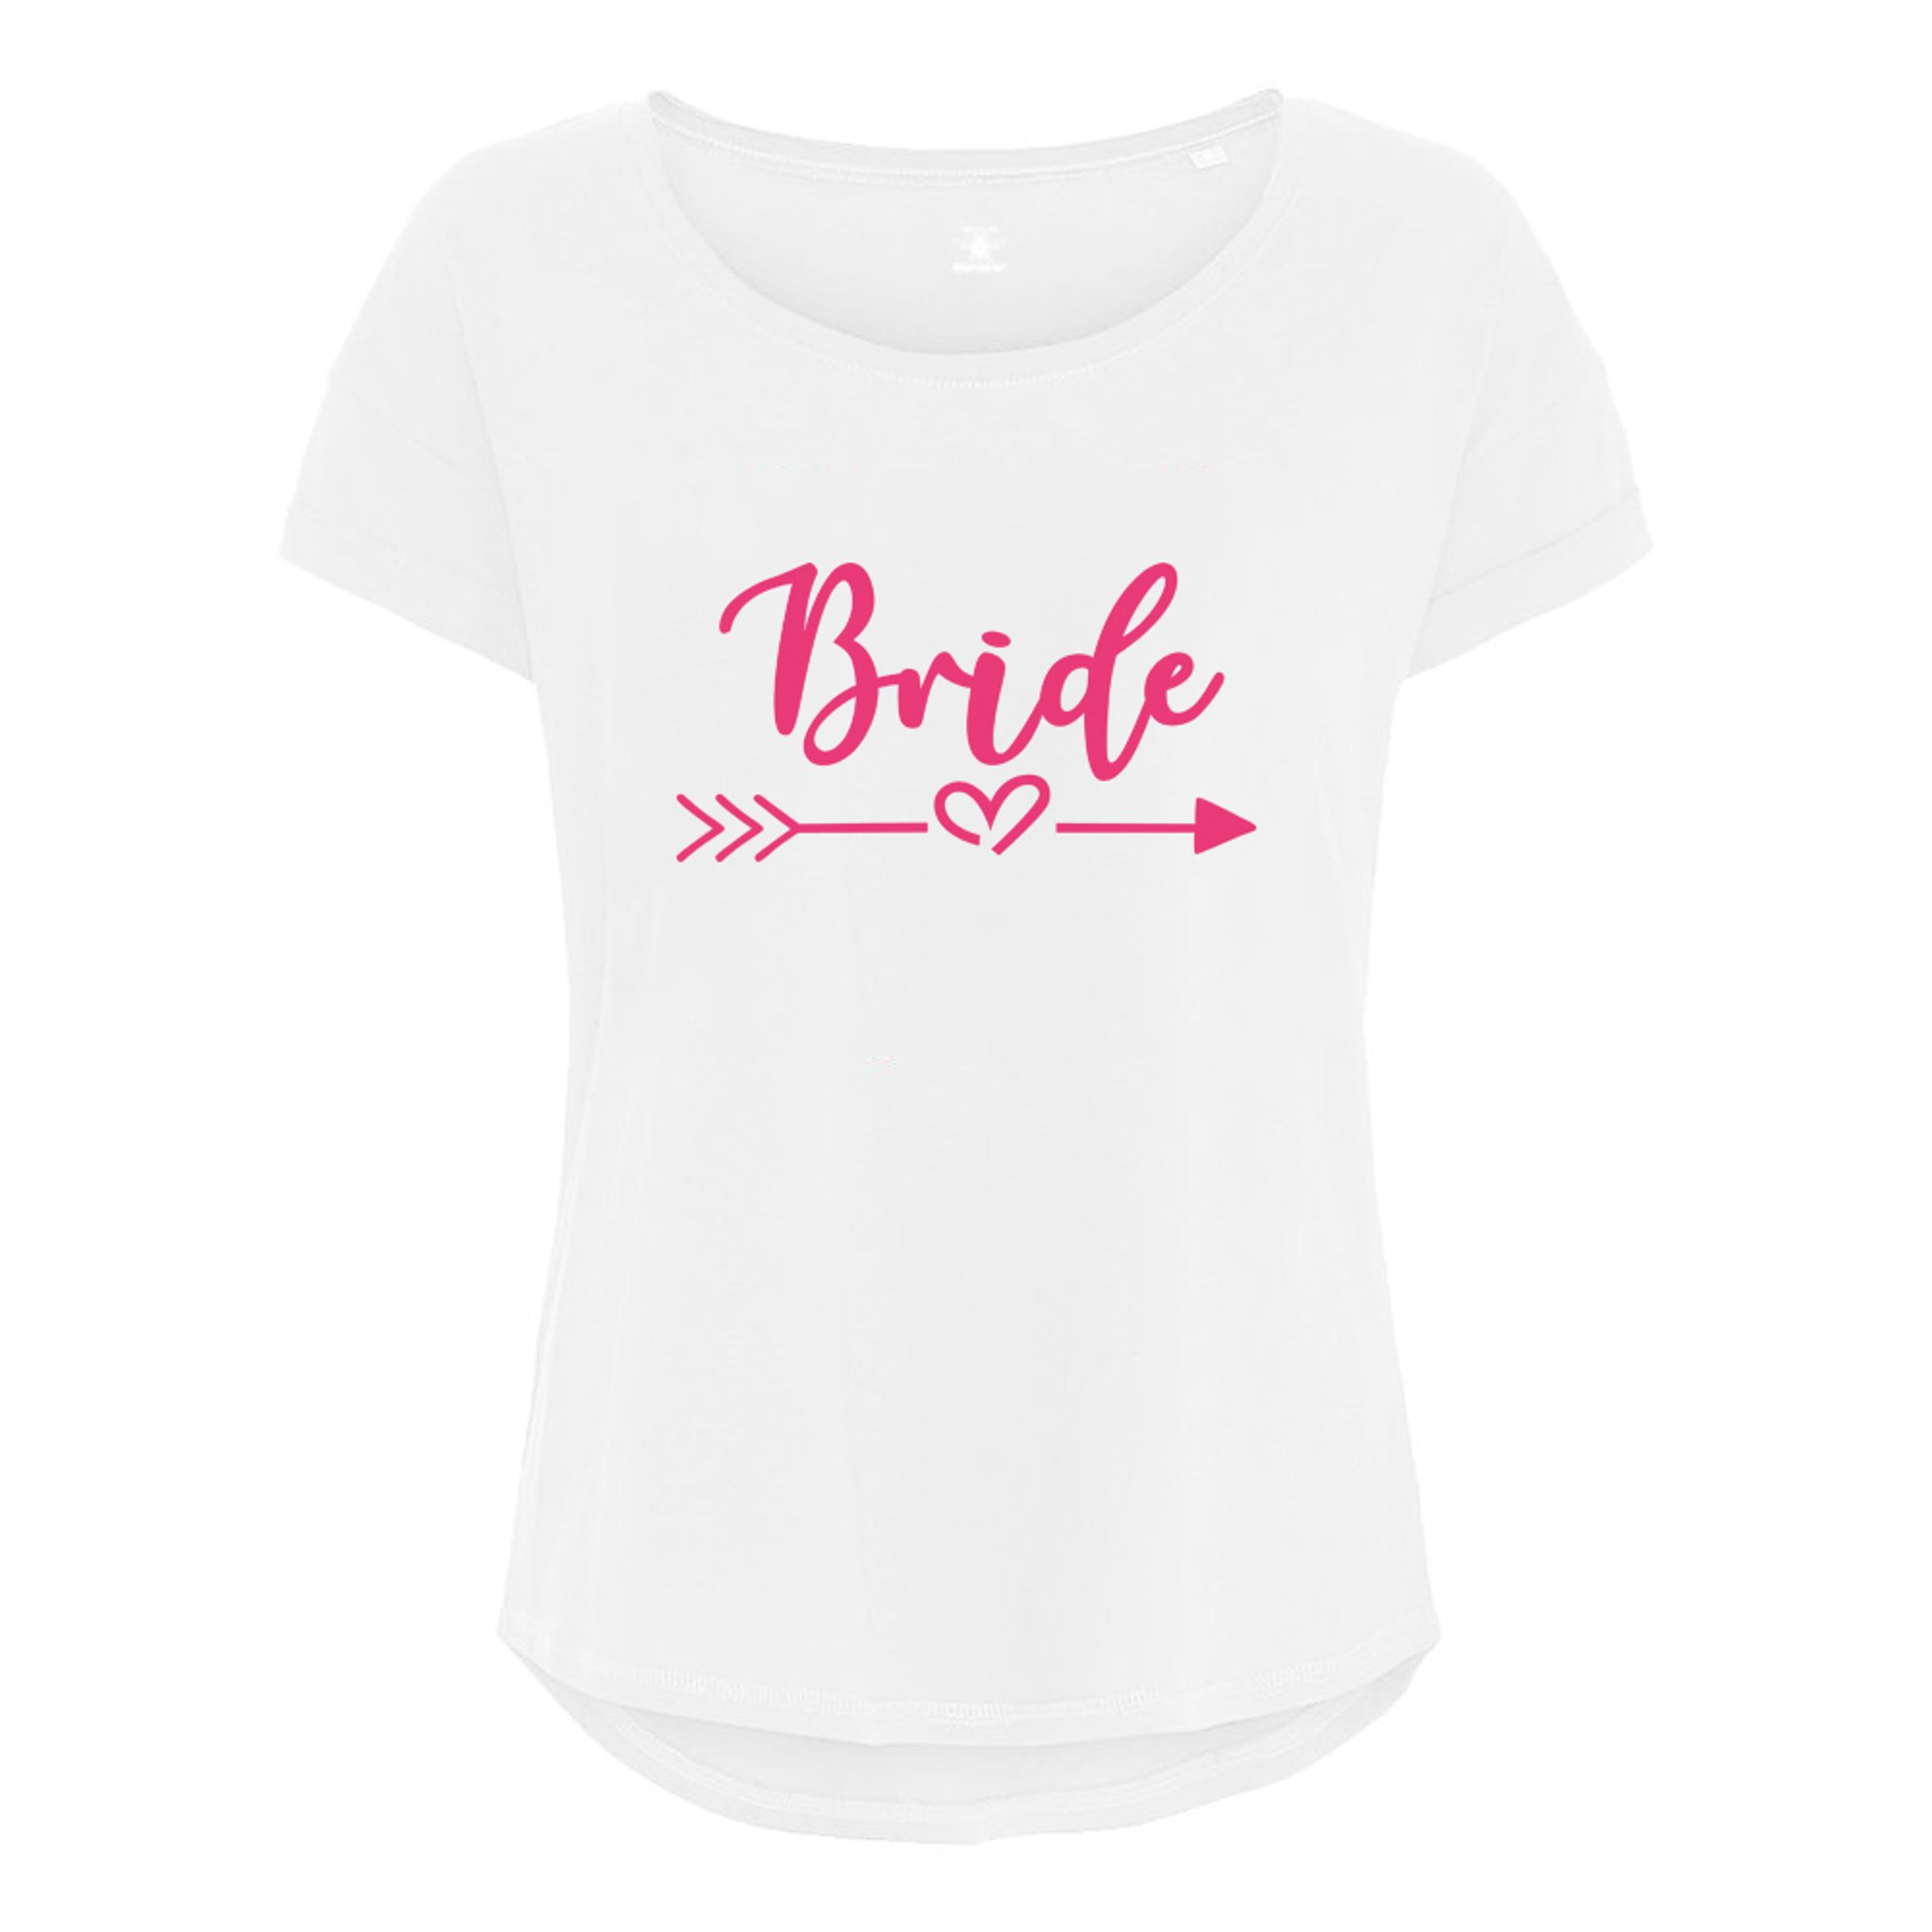 Bride Dam T-shirt - Large